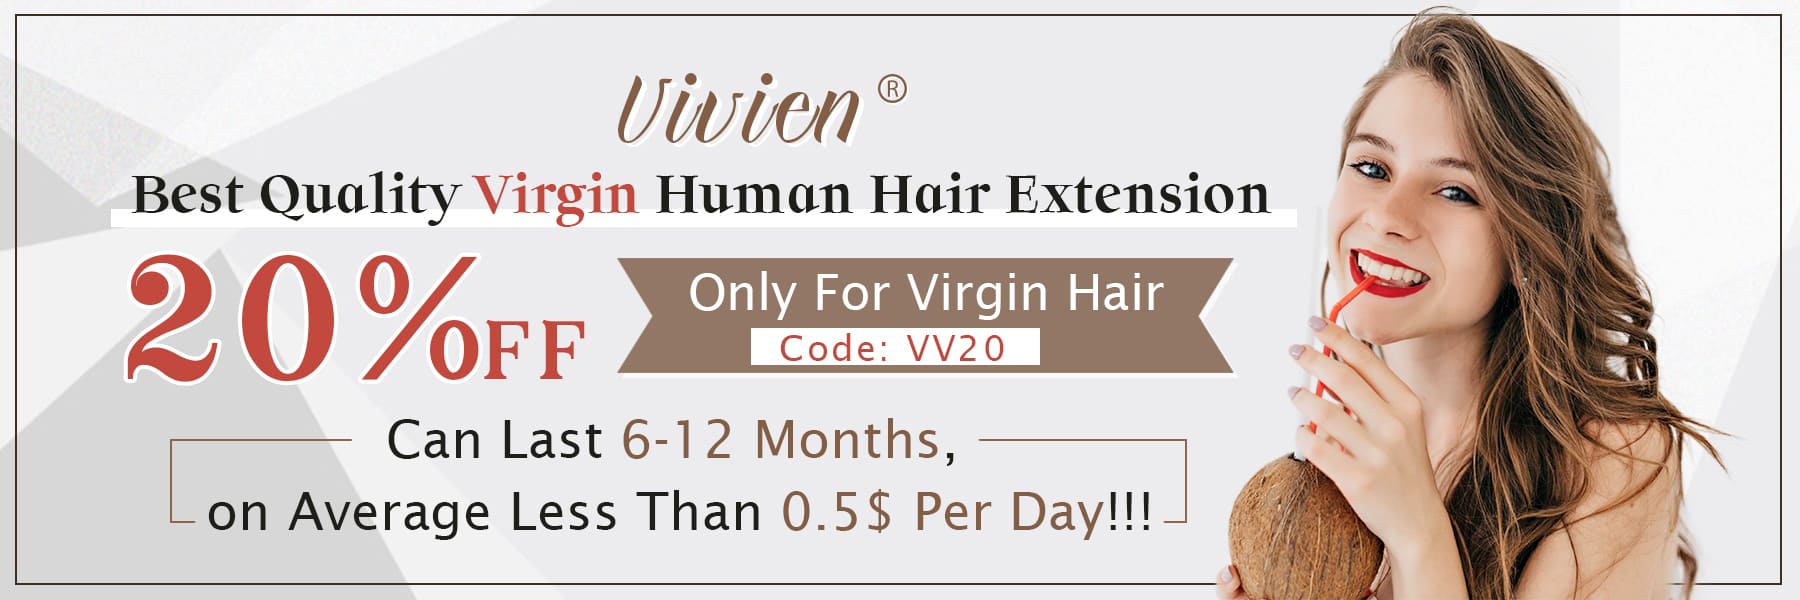 vivien virgin human hair extension